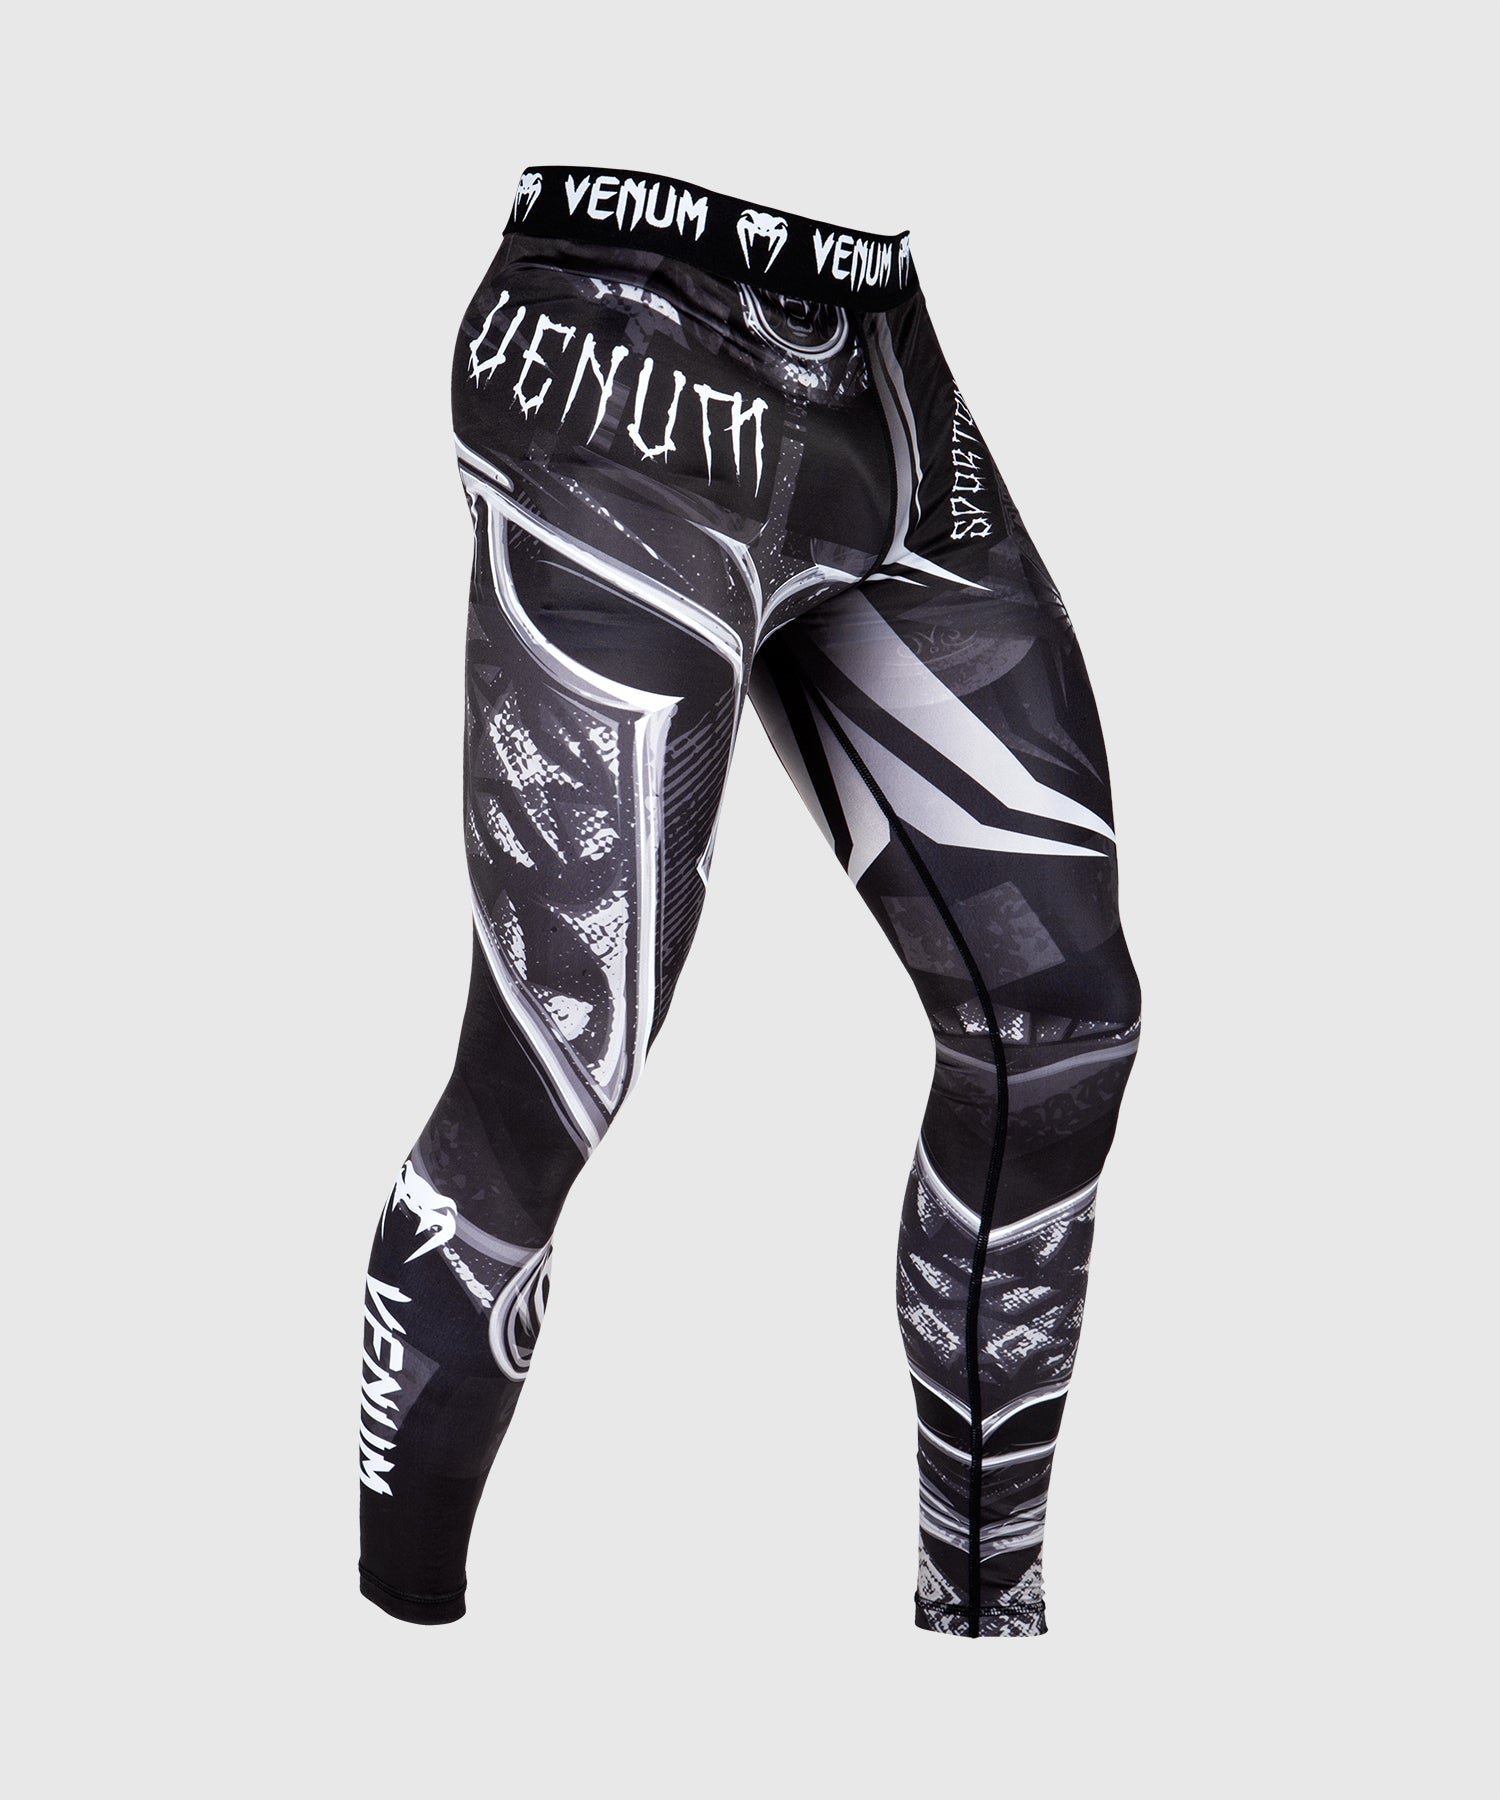 Pantalones compresión VENUM Gladiator 3.0 hombre – Shopavia